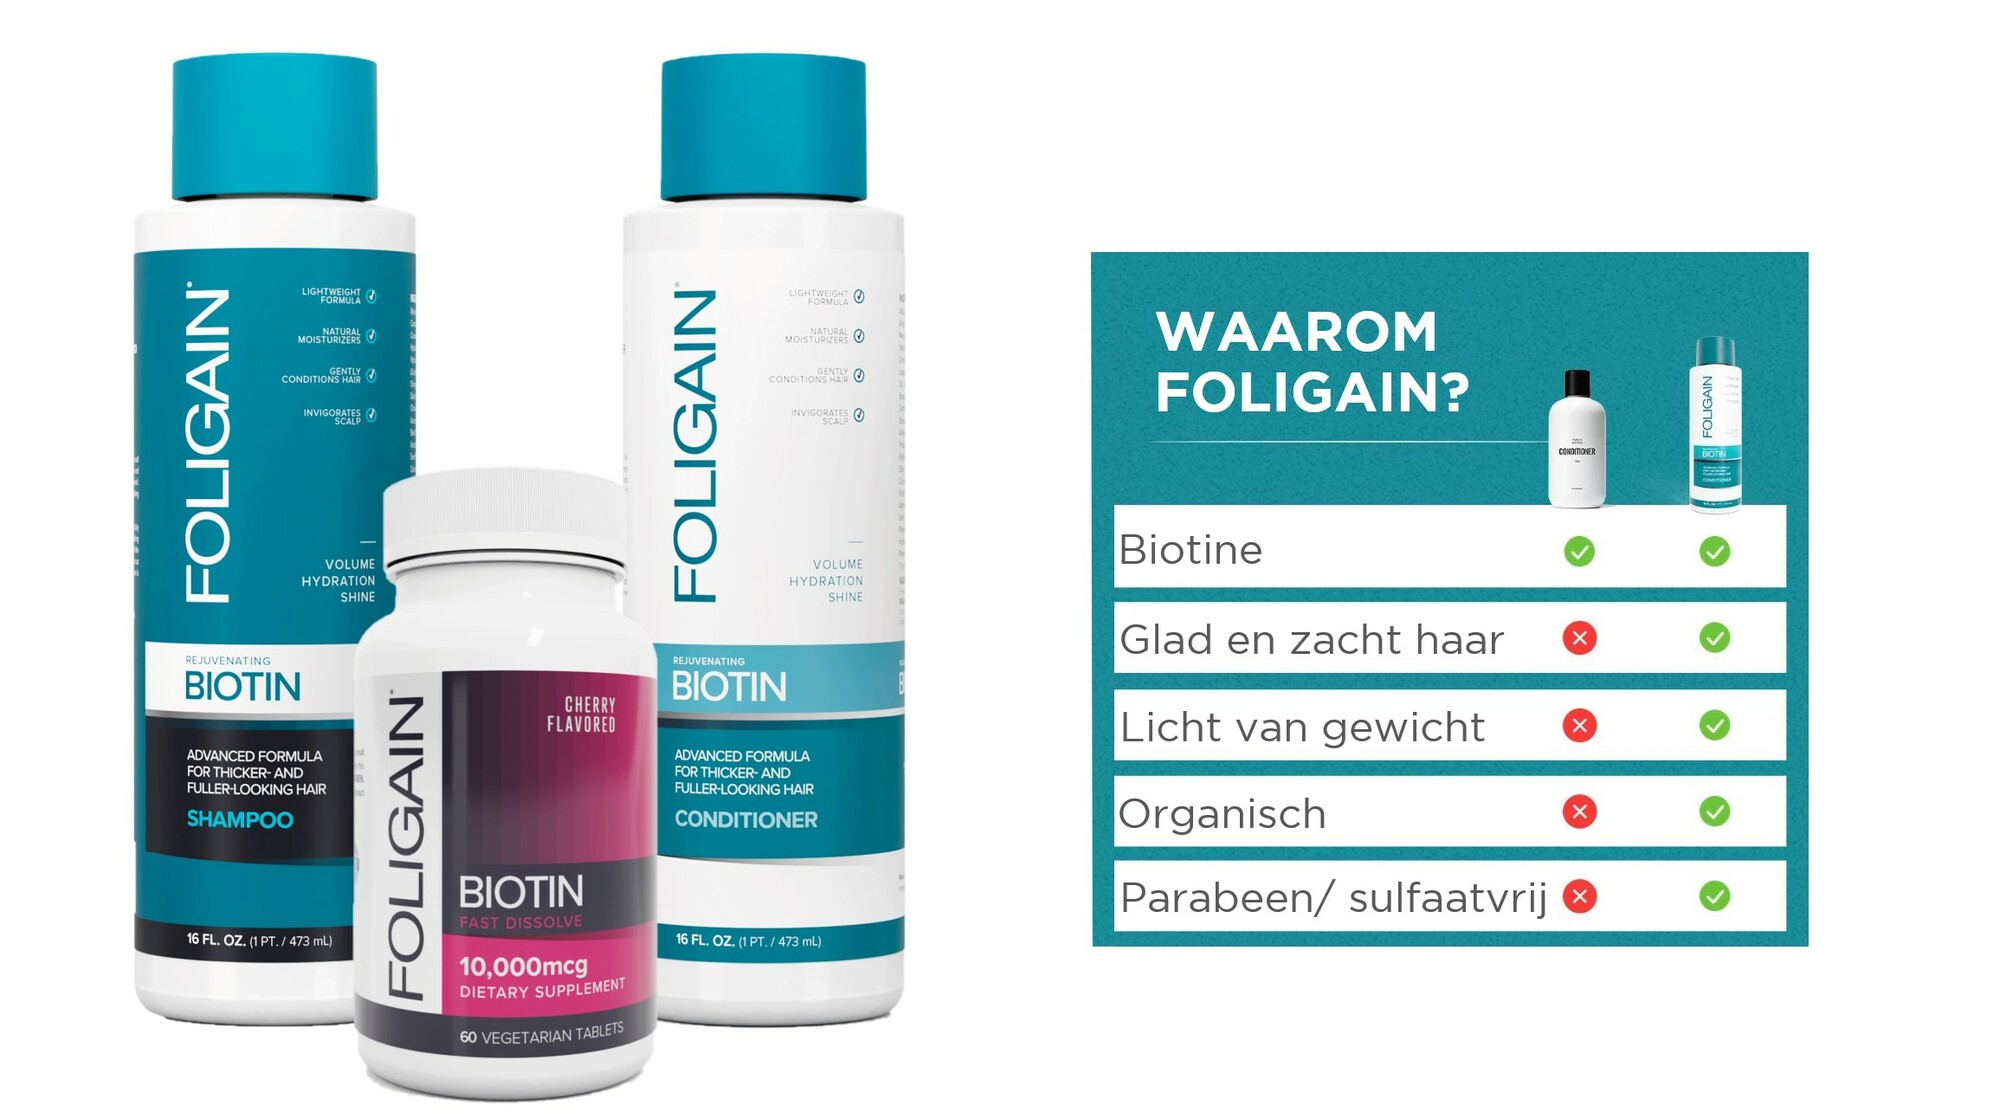 Foligain Biotine